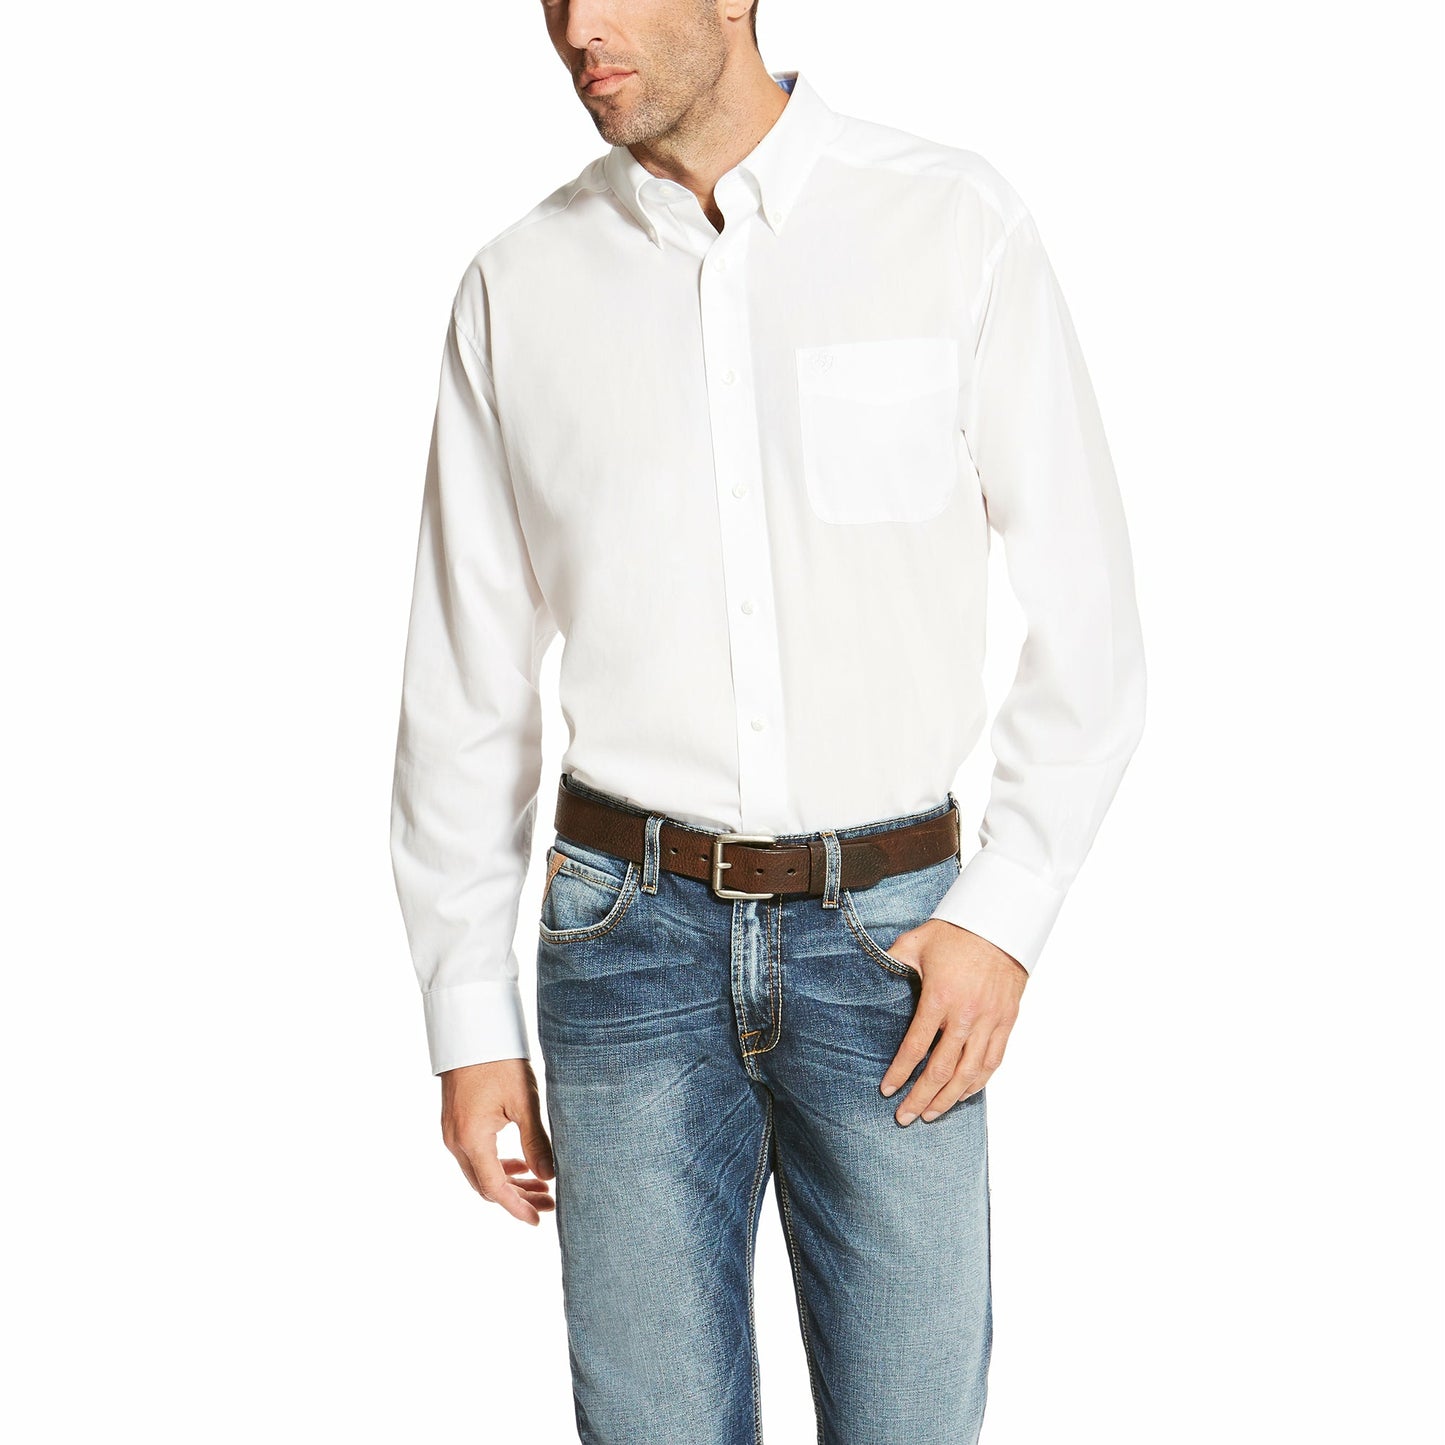 Ariat Men's Wrinkle Free Solid Shirt White